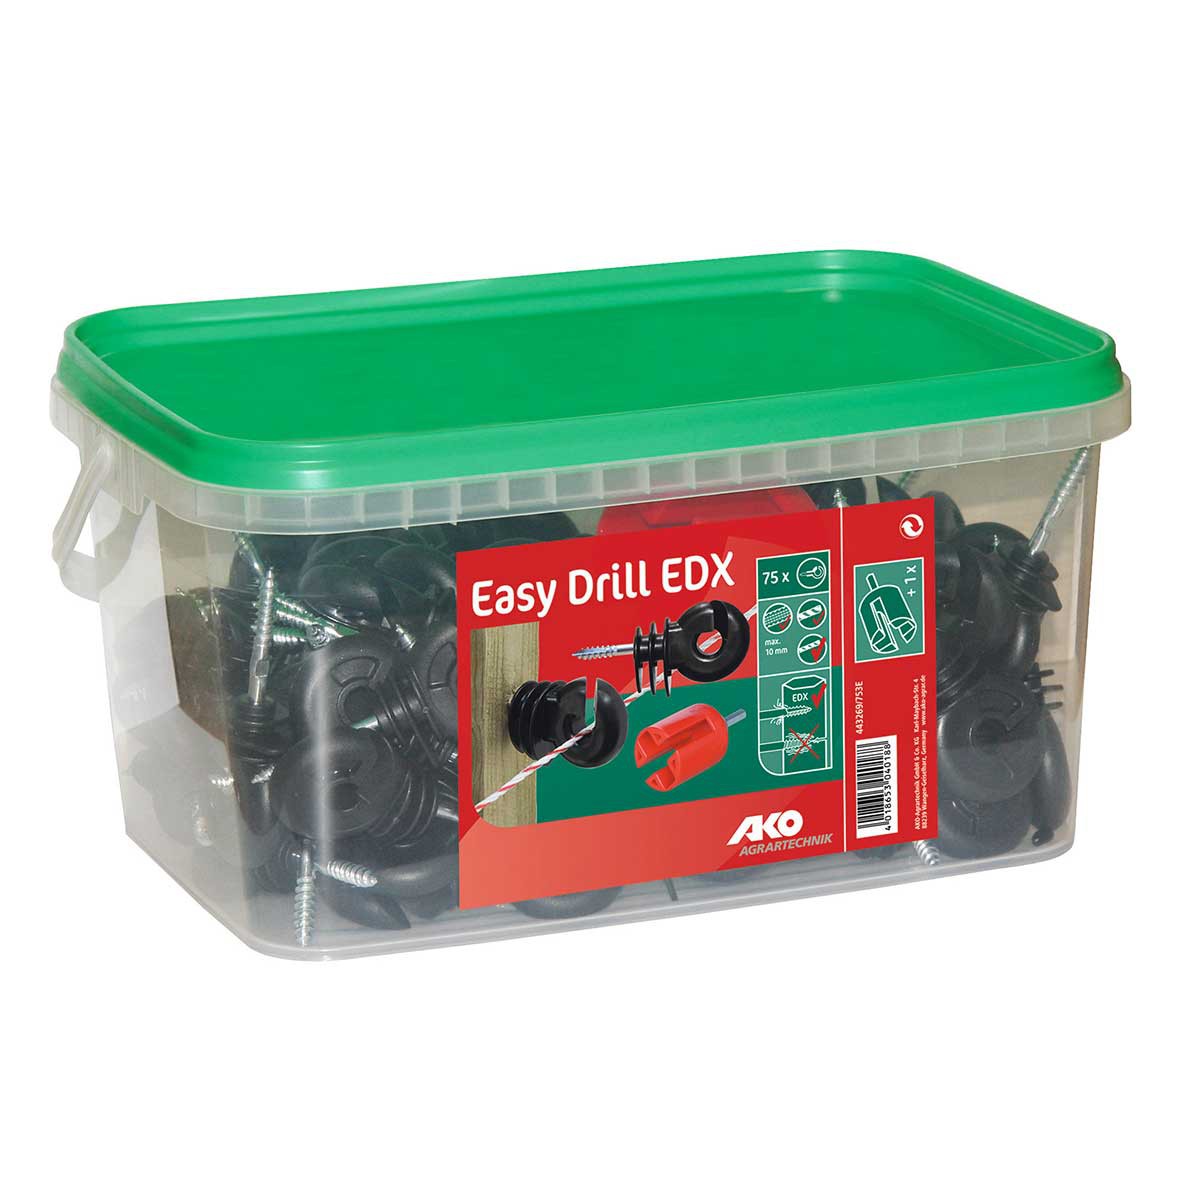 75x Isolateur annulaire Premium Easy Drill EDX AKO avec visseur